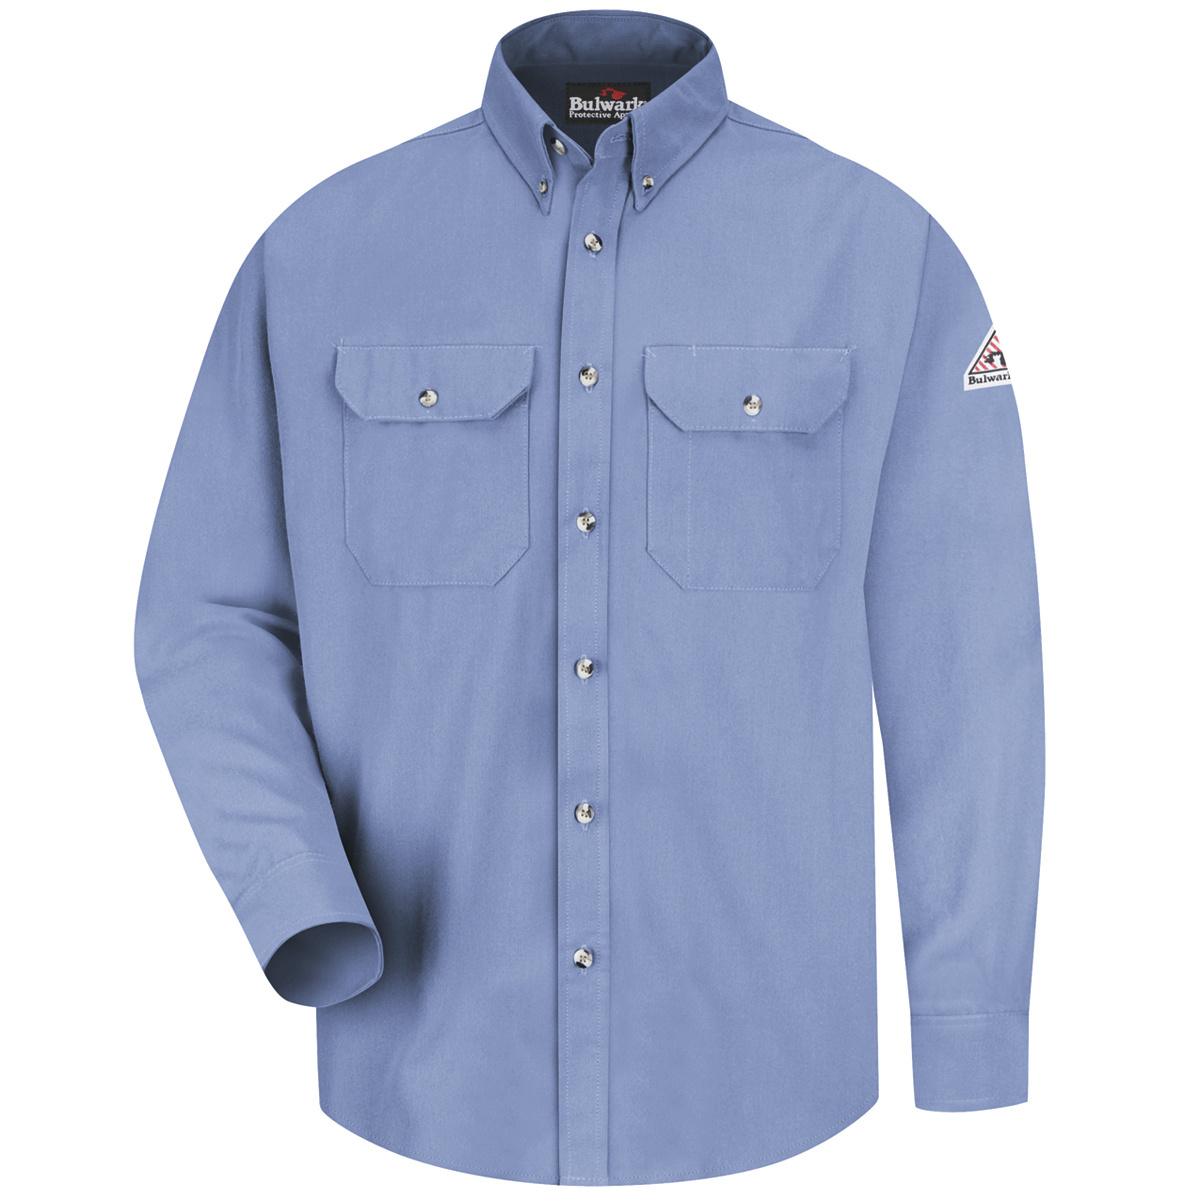 Bulwark® 3X Tall Light Blue Modacrylic/Lyocell/Aramid Flame Resistant Dress Uniform Shirt With Button Front Closure